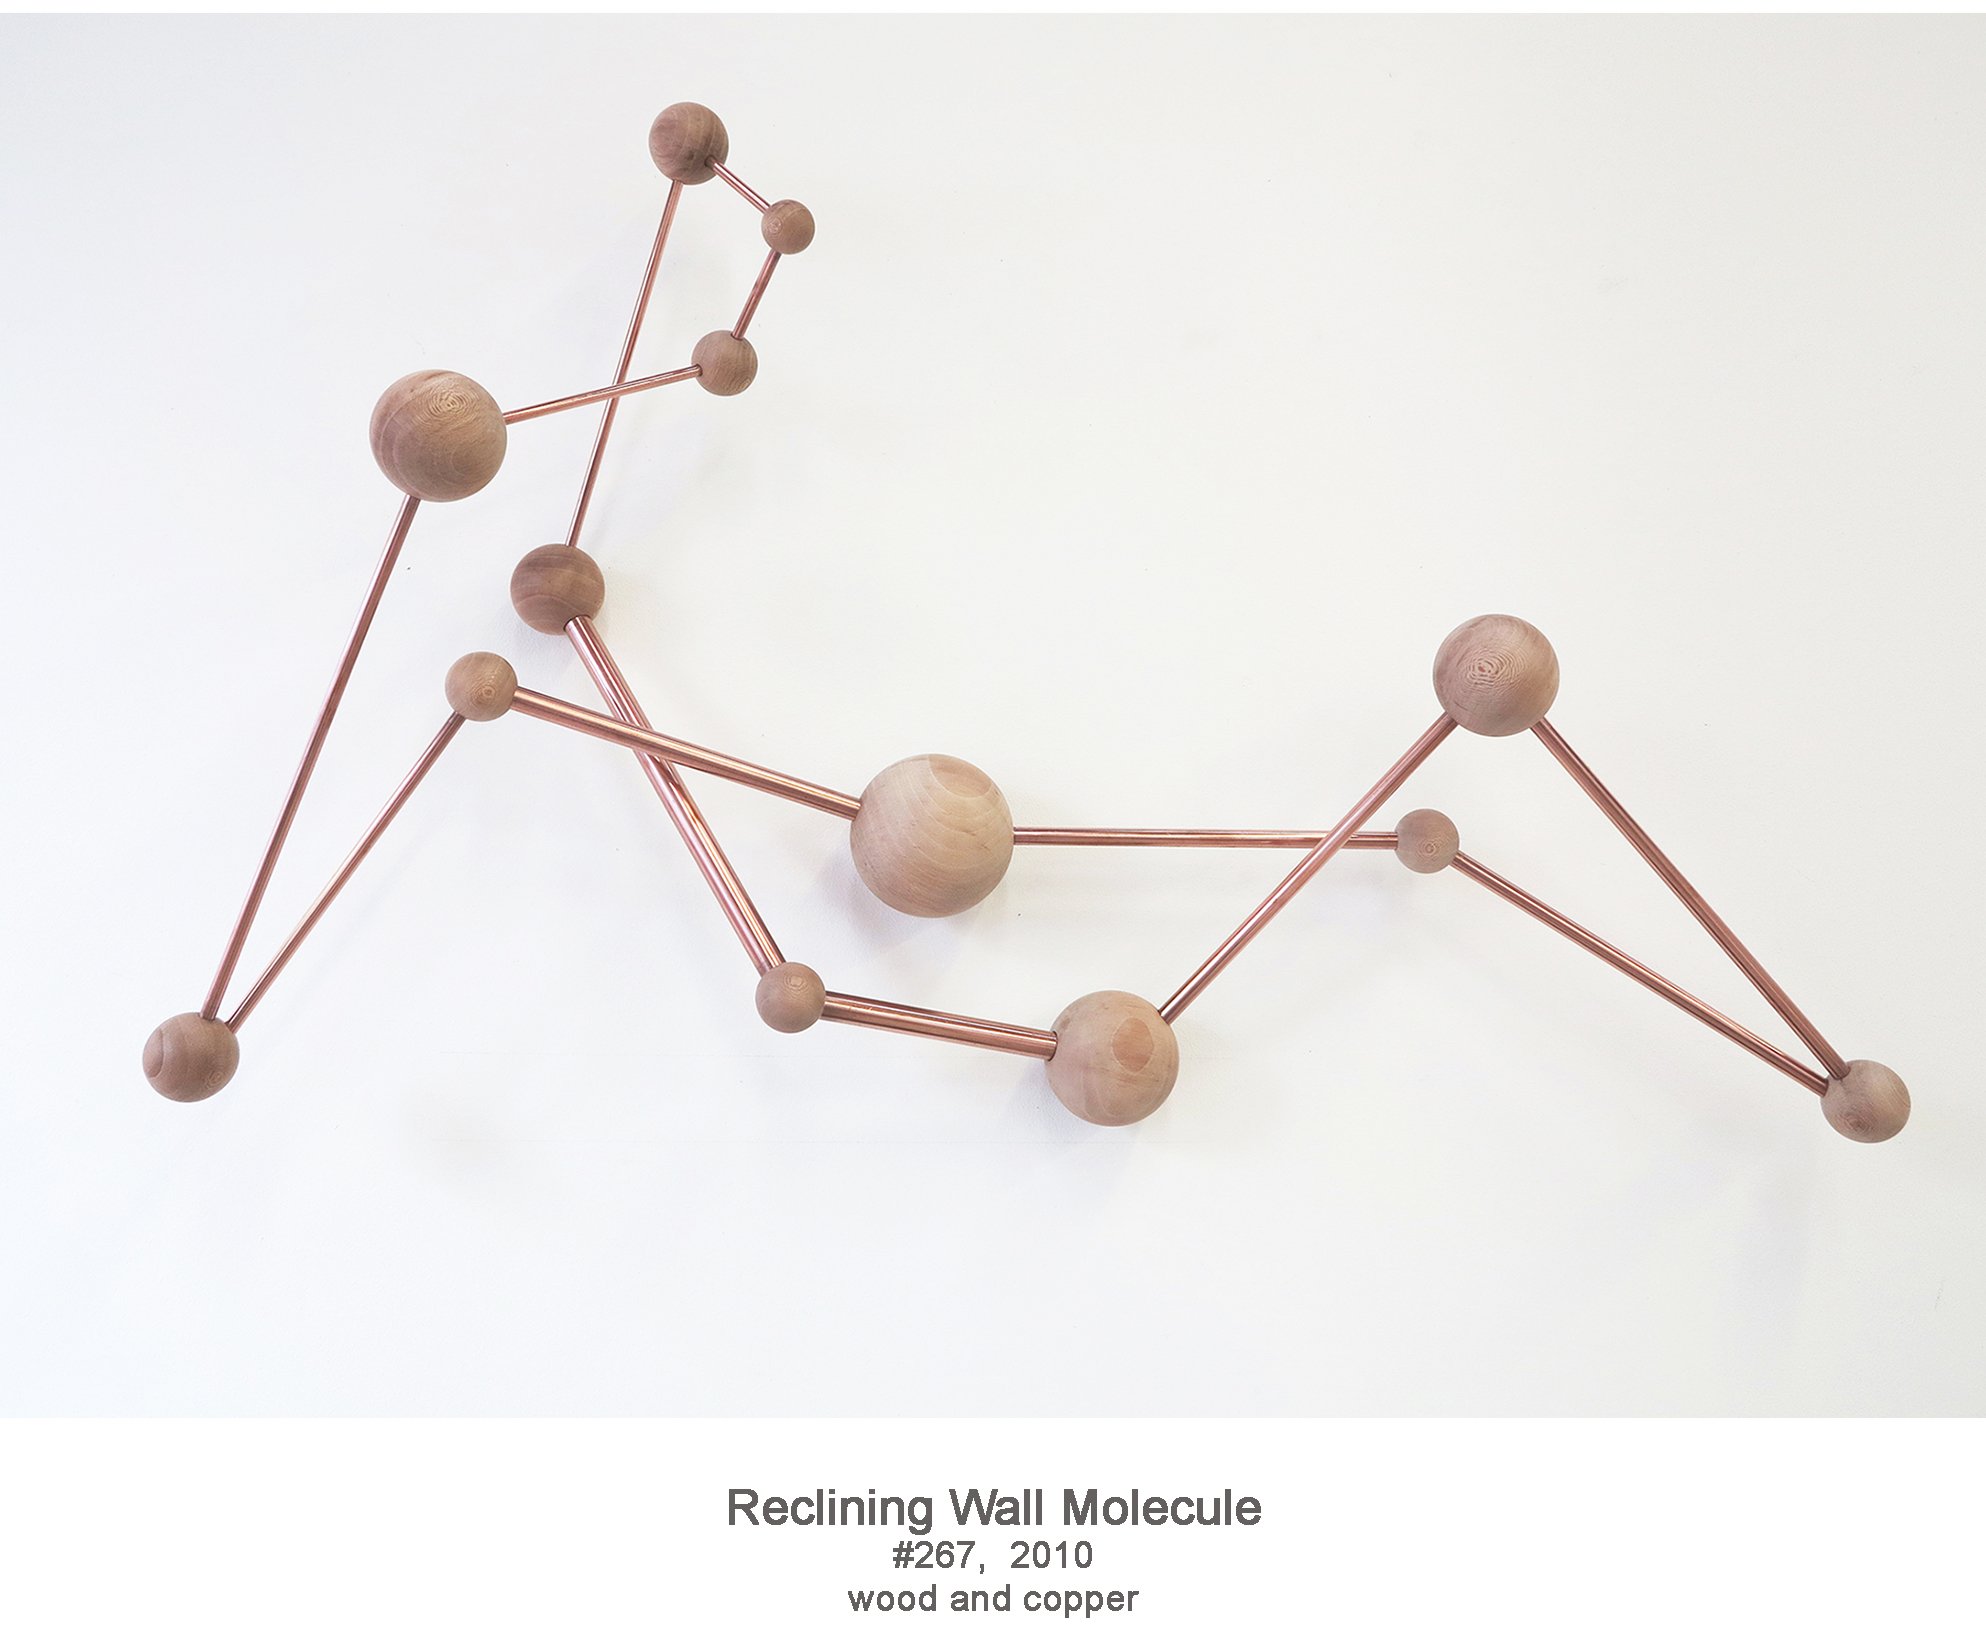 Reclining Wall Molecule, 2010, wood & copper, #267